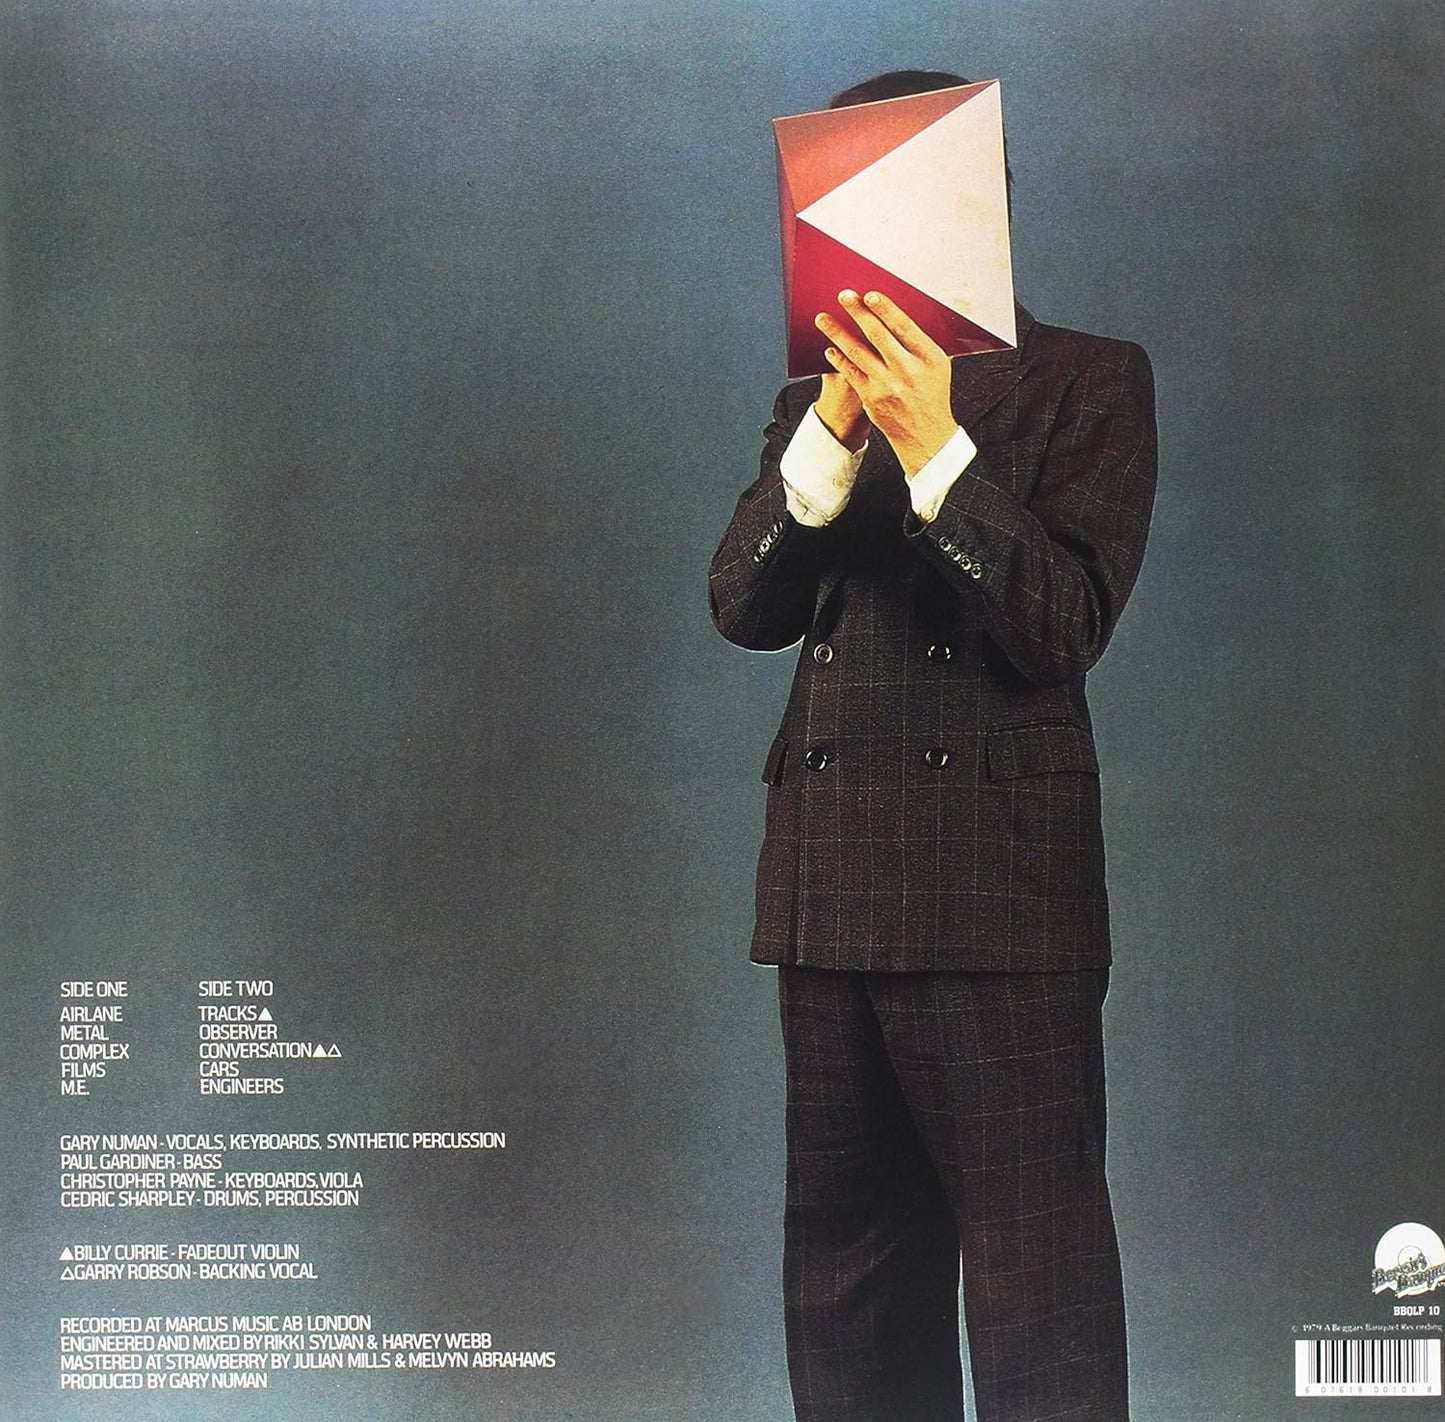 Gary Numan - Pleasure Principle (Remastered) (LP)